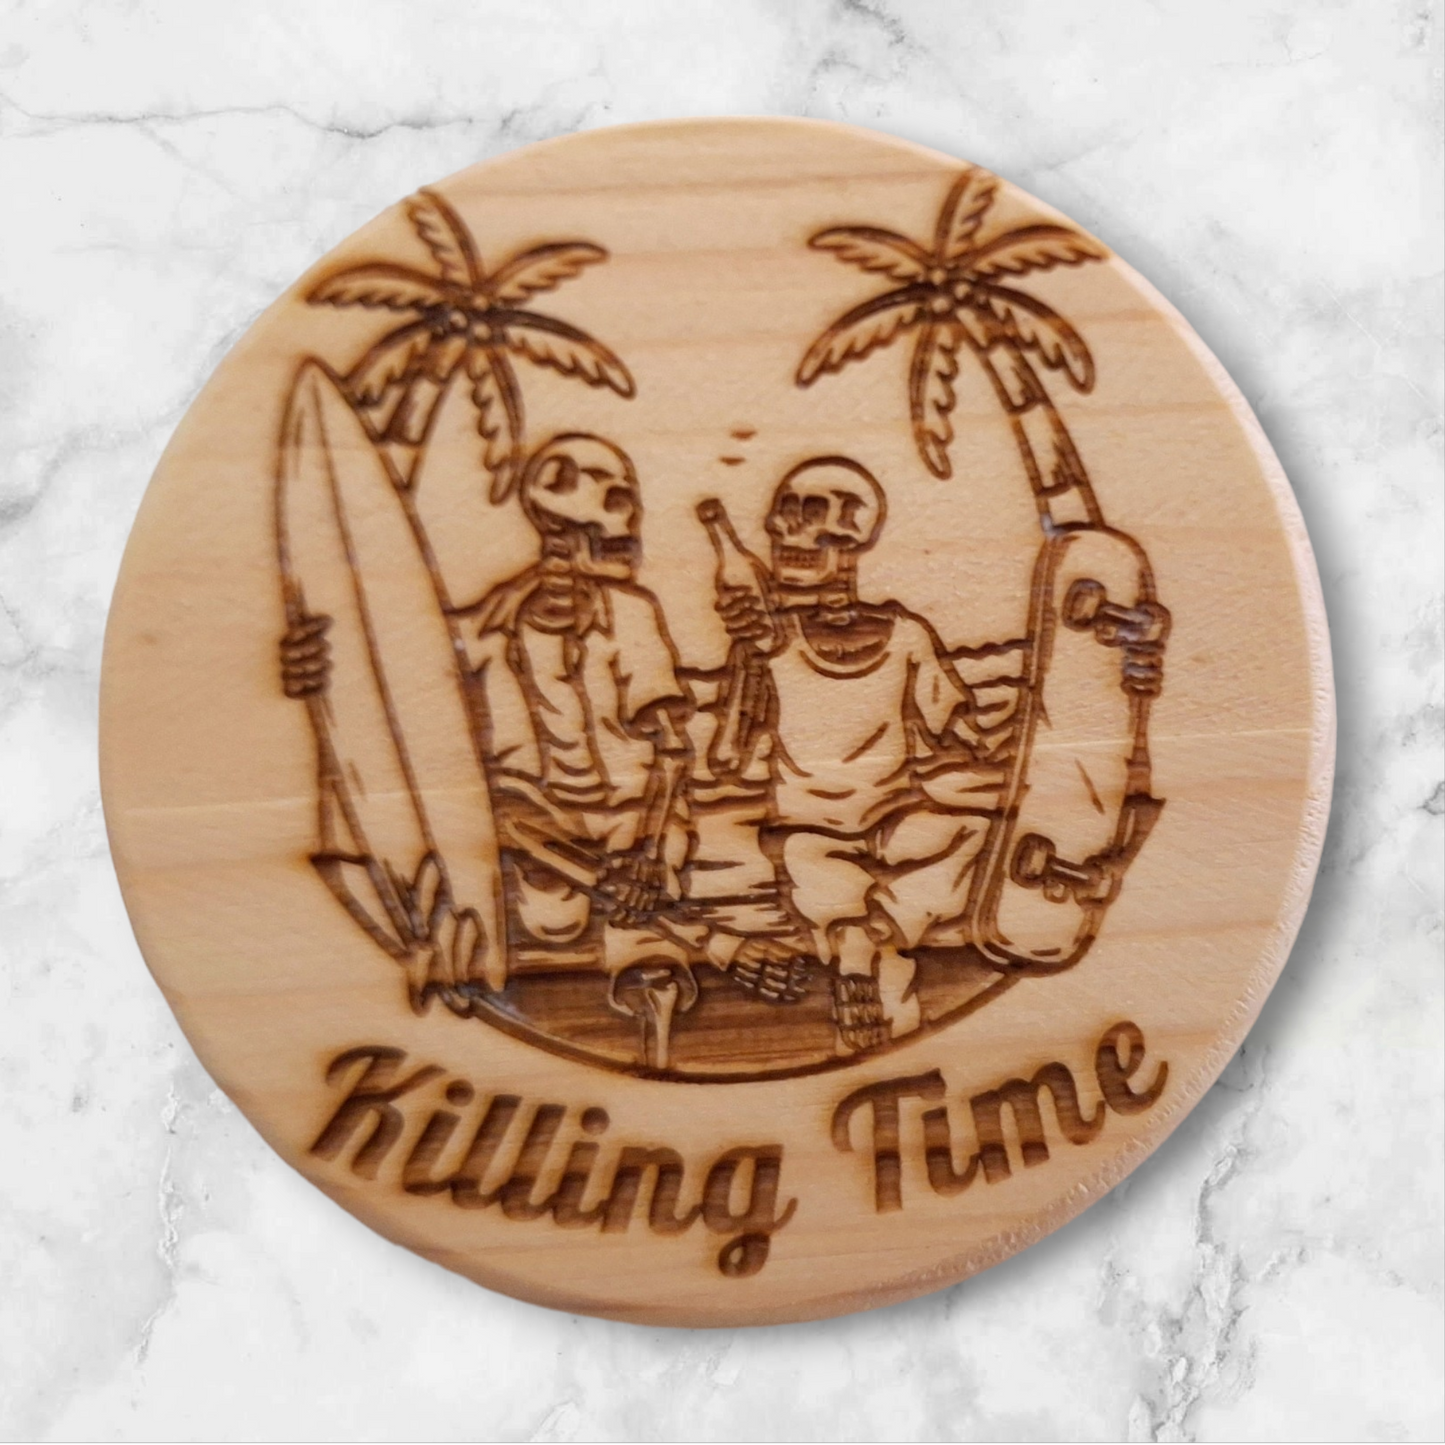 Killing Time Engraved Coaster 4 Pack